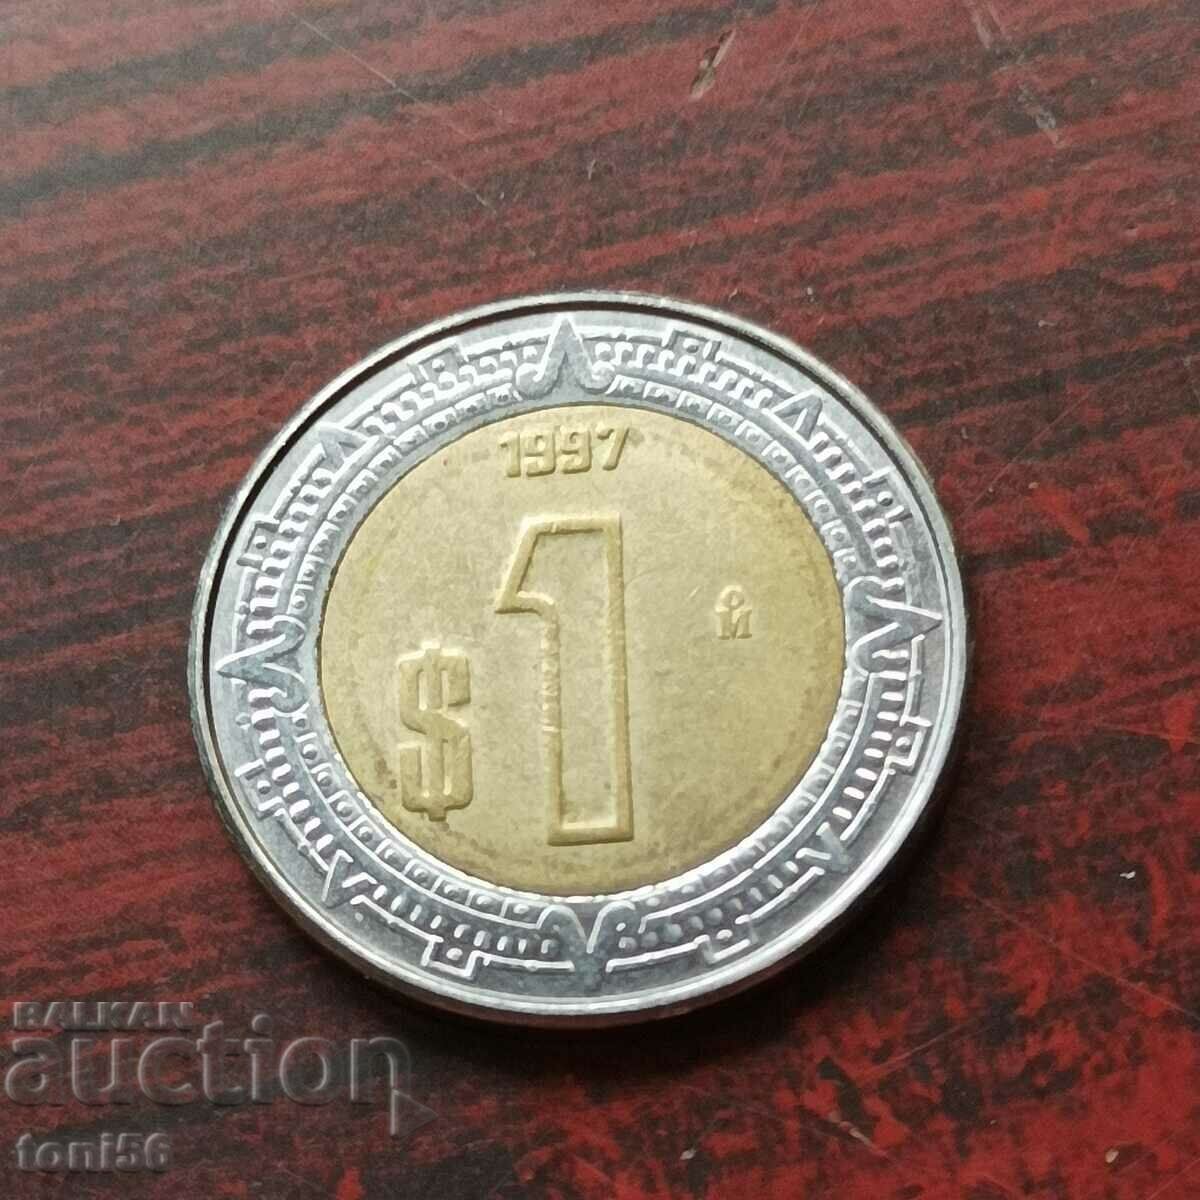 Mexico 1 peso 1997 aUNC